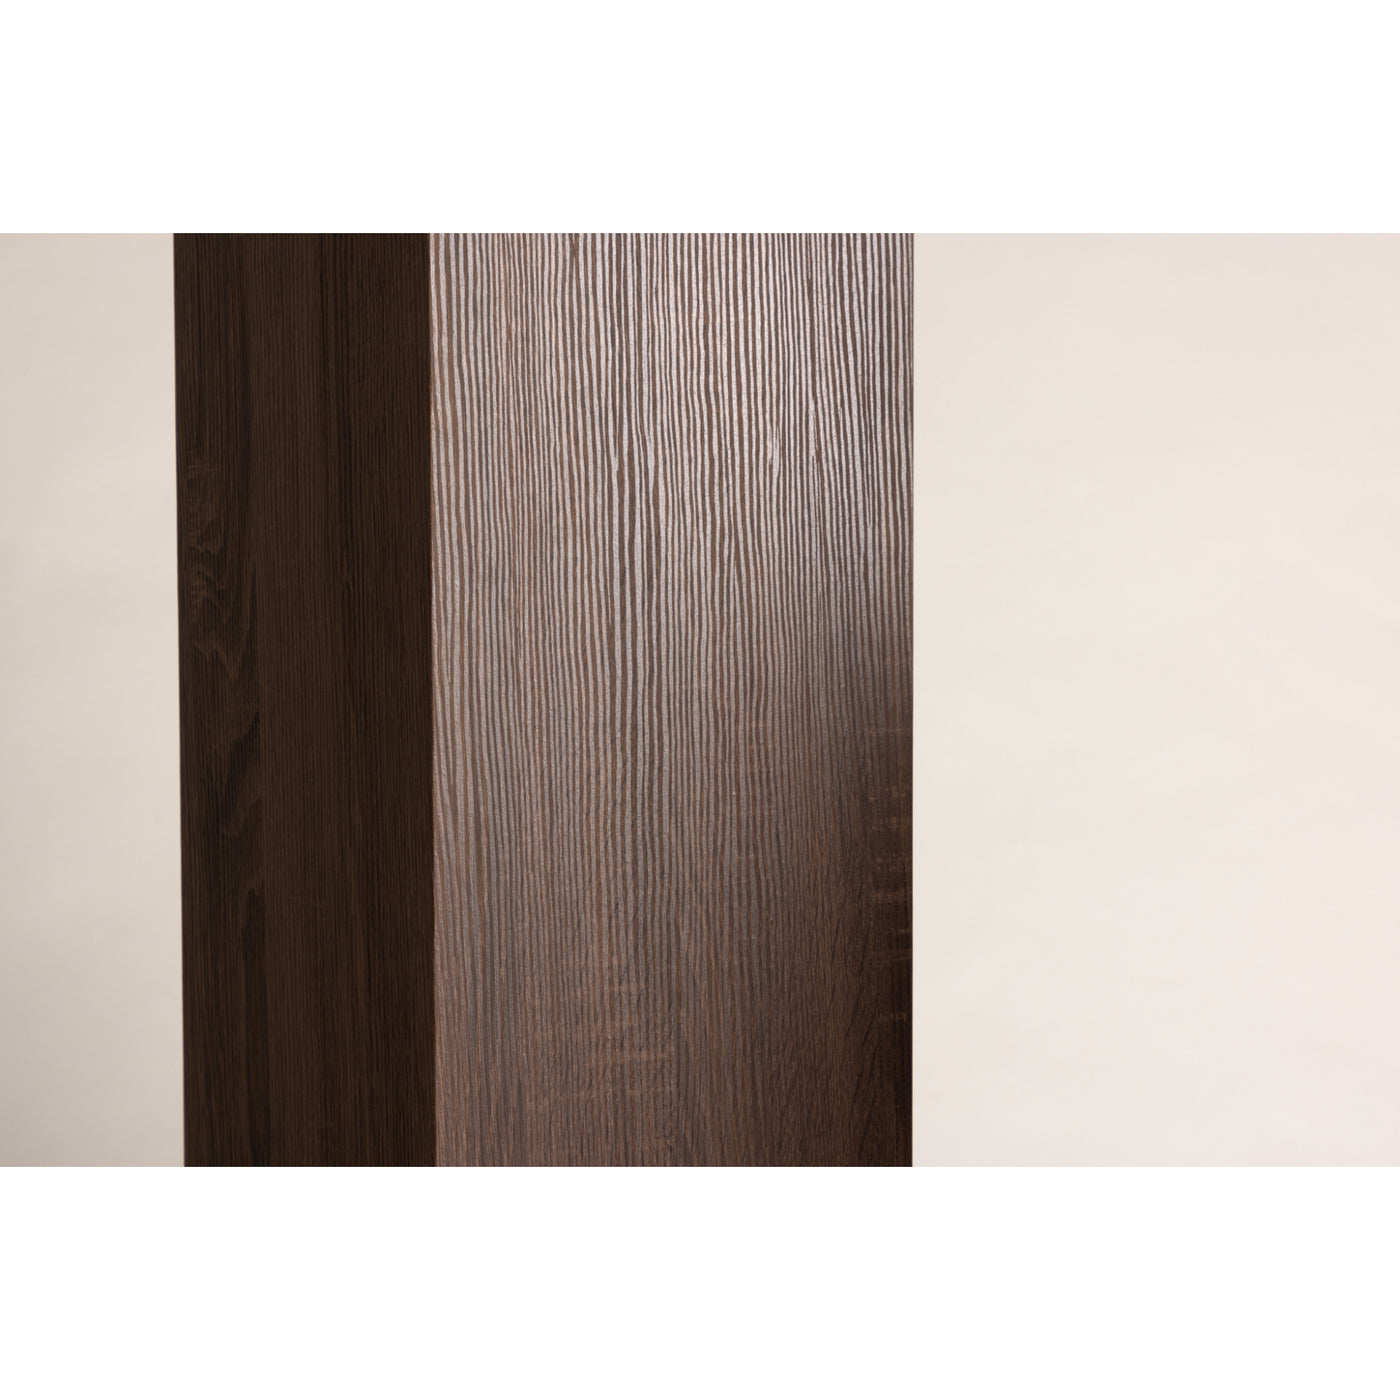 Sigourney – Low Storage – Braun / Braunes Holz